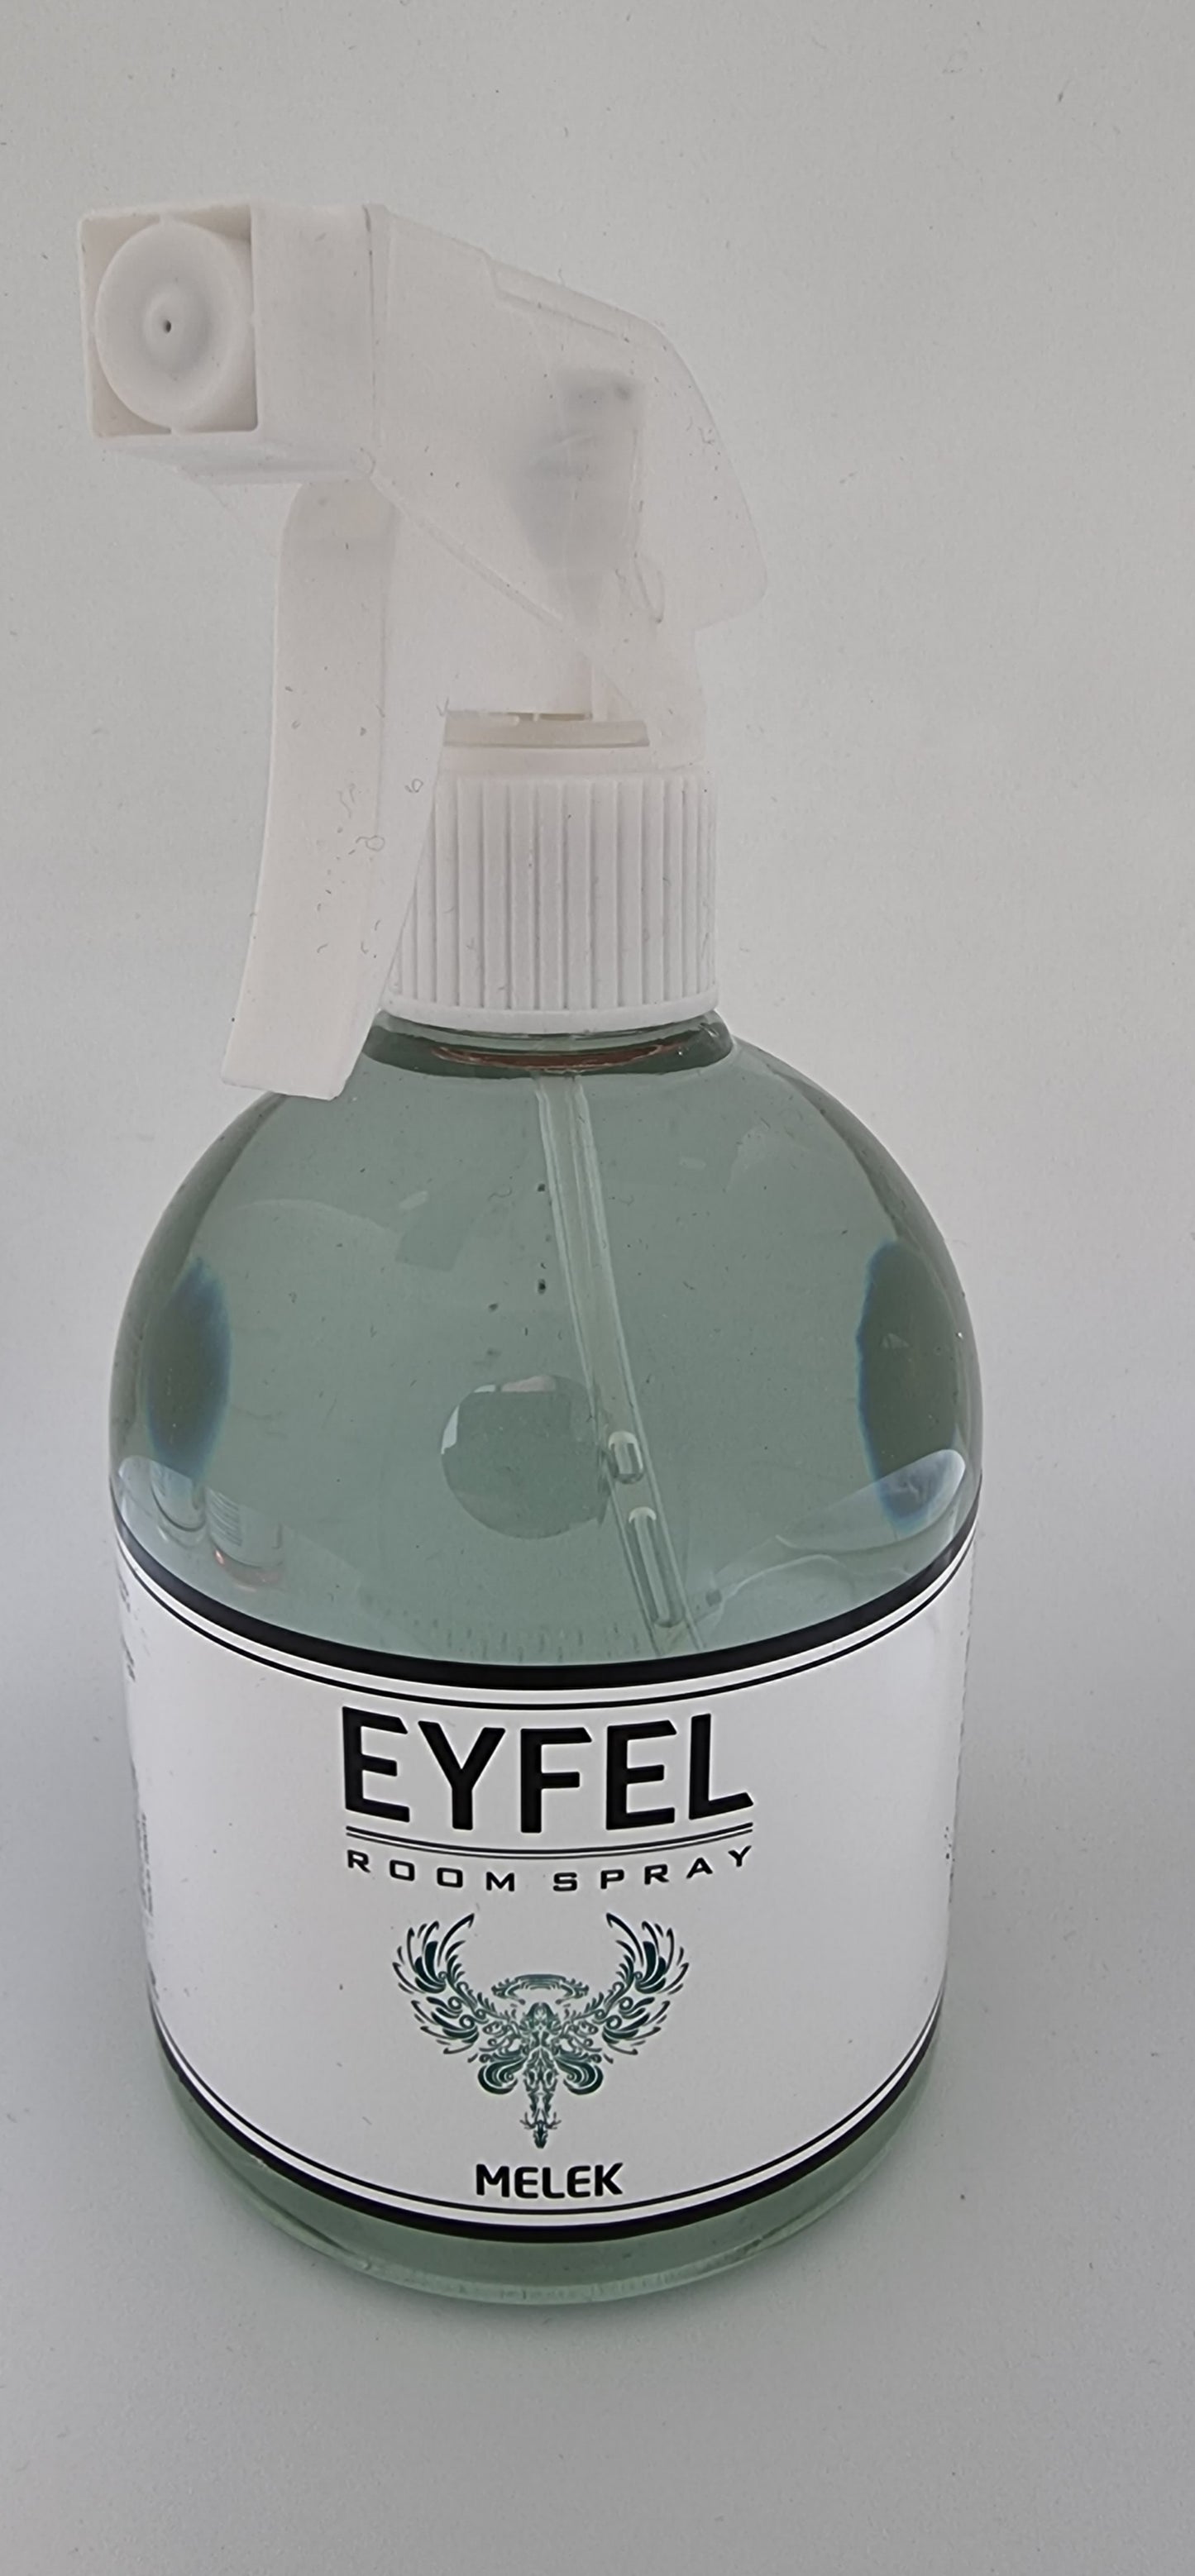 Eyfel Room Spray